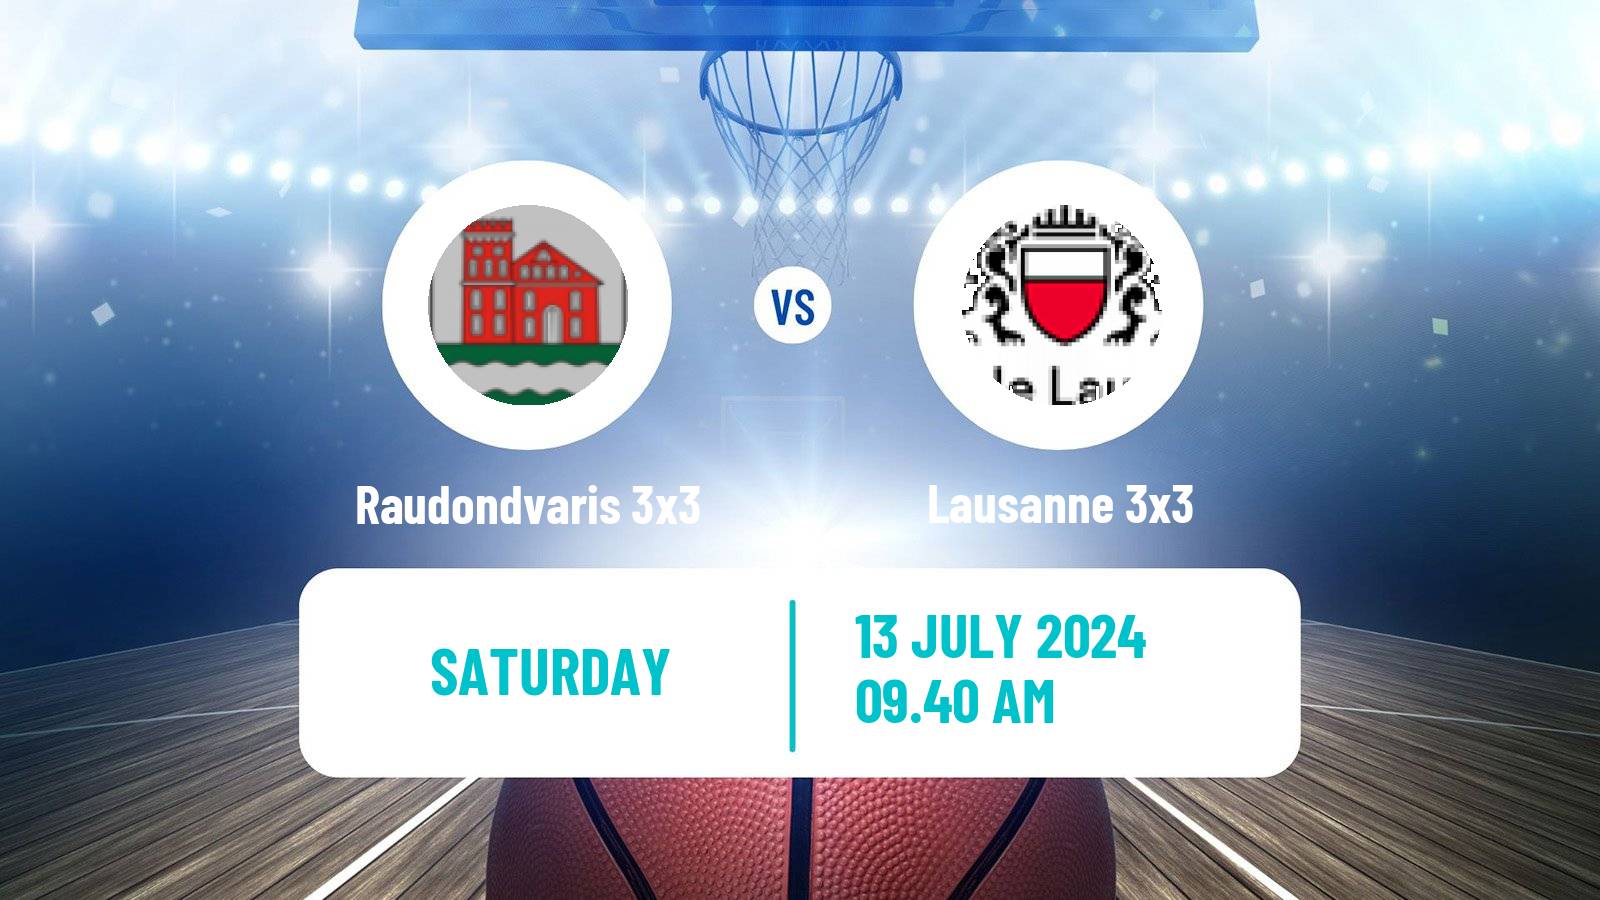 Basketball World Tour Almaty 3x3 Raudondvaris 3x3 - Lausanne 3x3